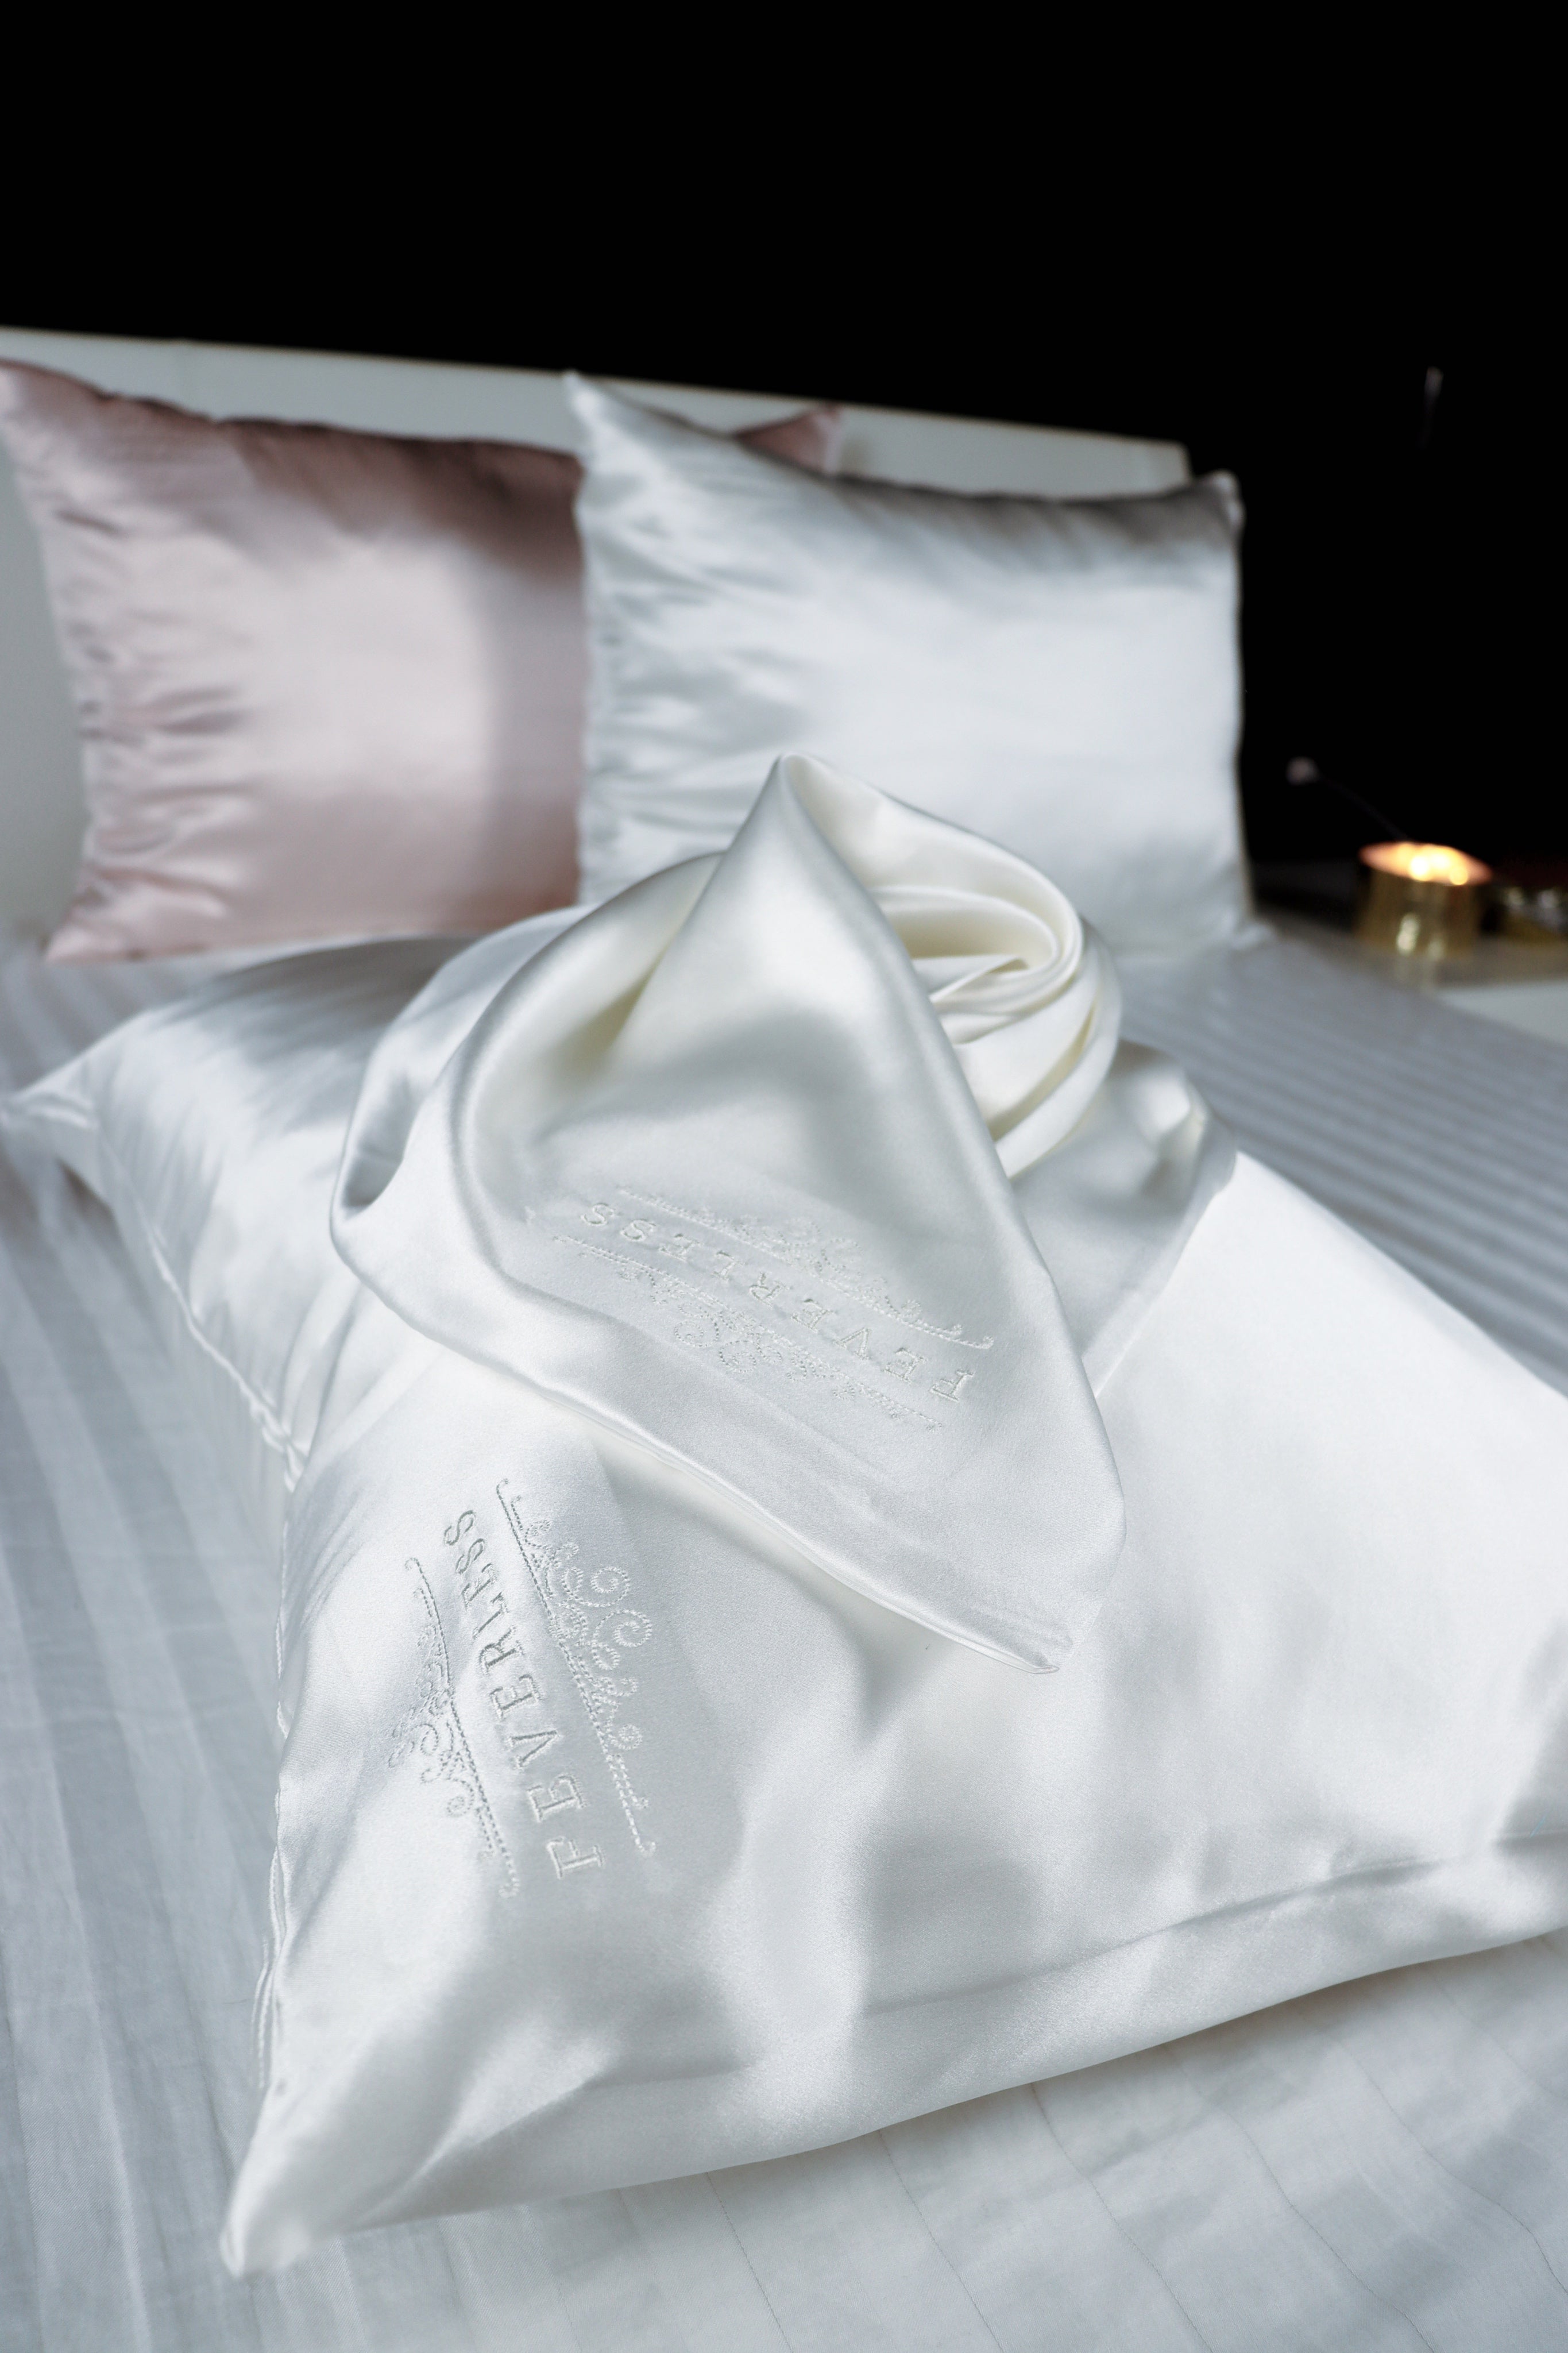 Glowing Hair & Skin SET - STANDARD Size Curling Kit + 1 FeverLess Pillowcase in WHITE Natural Silk